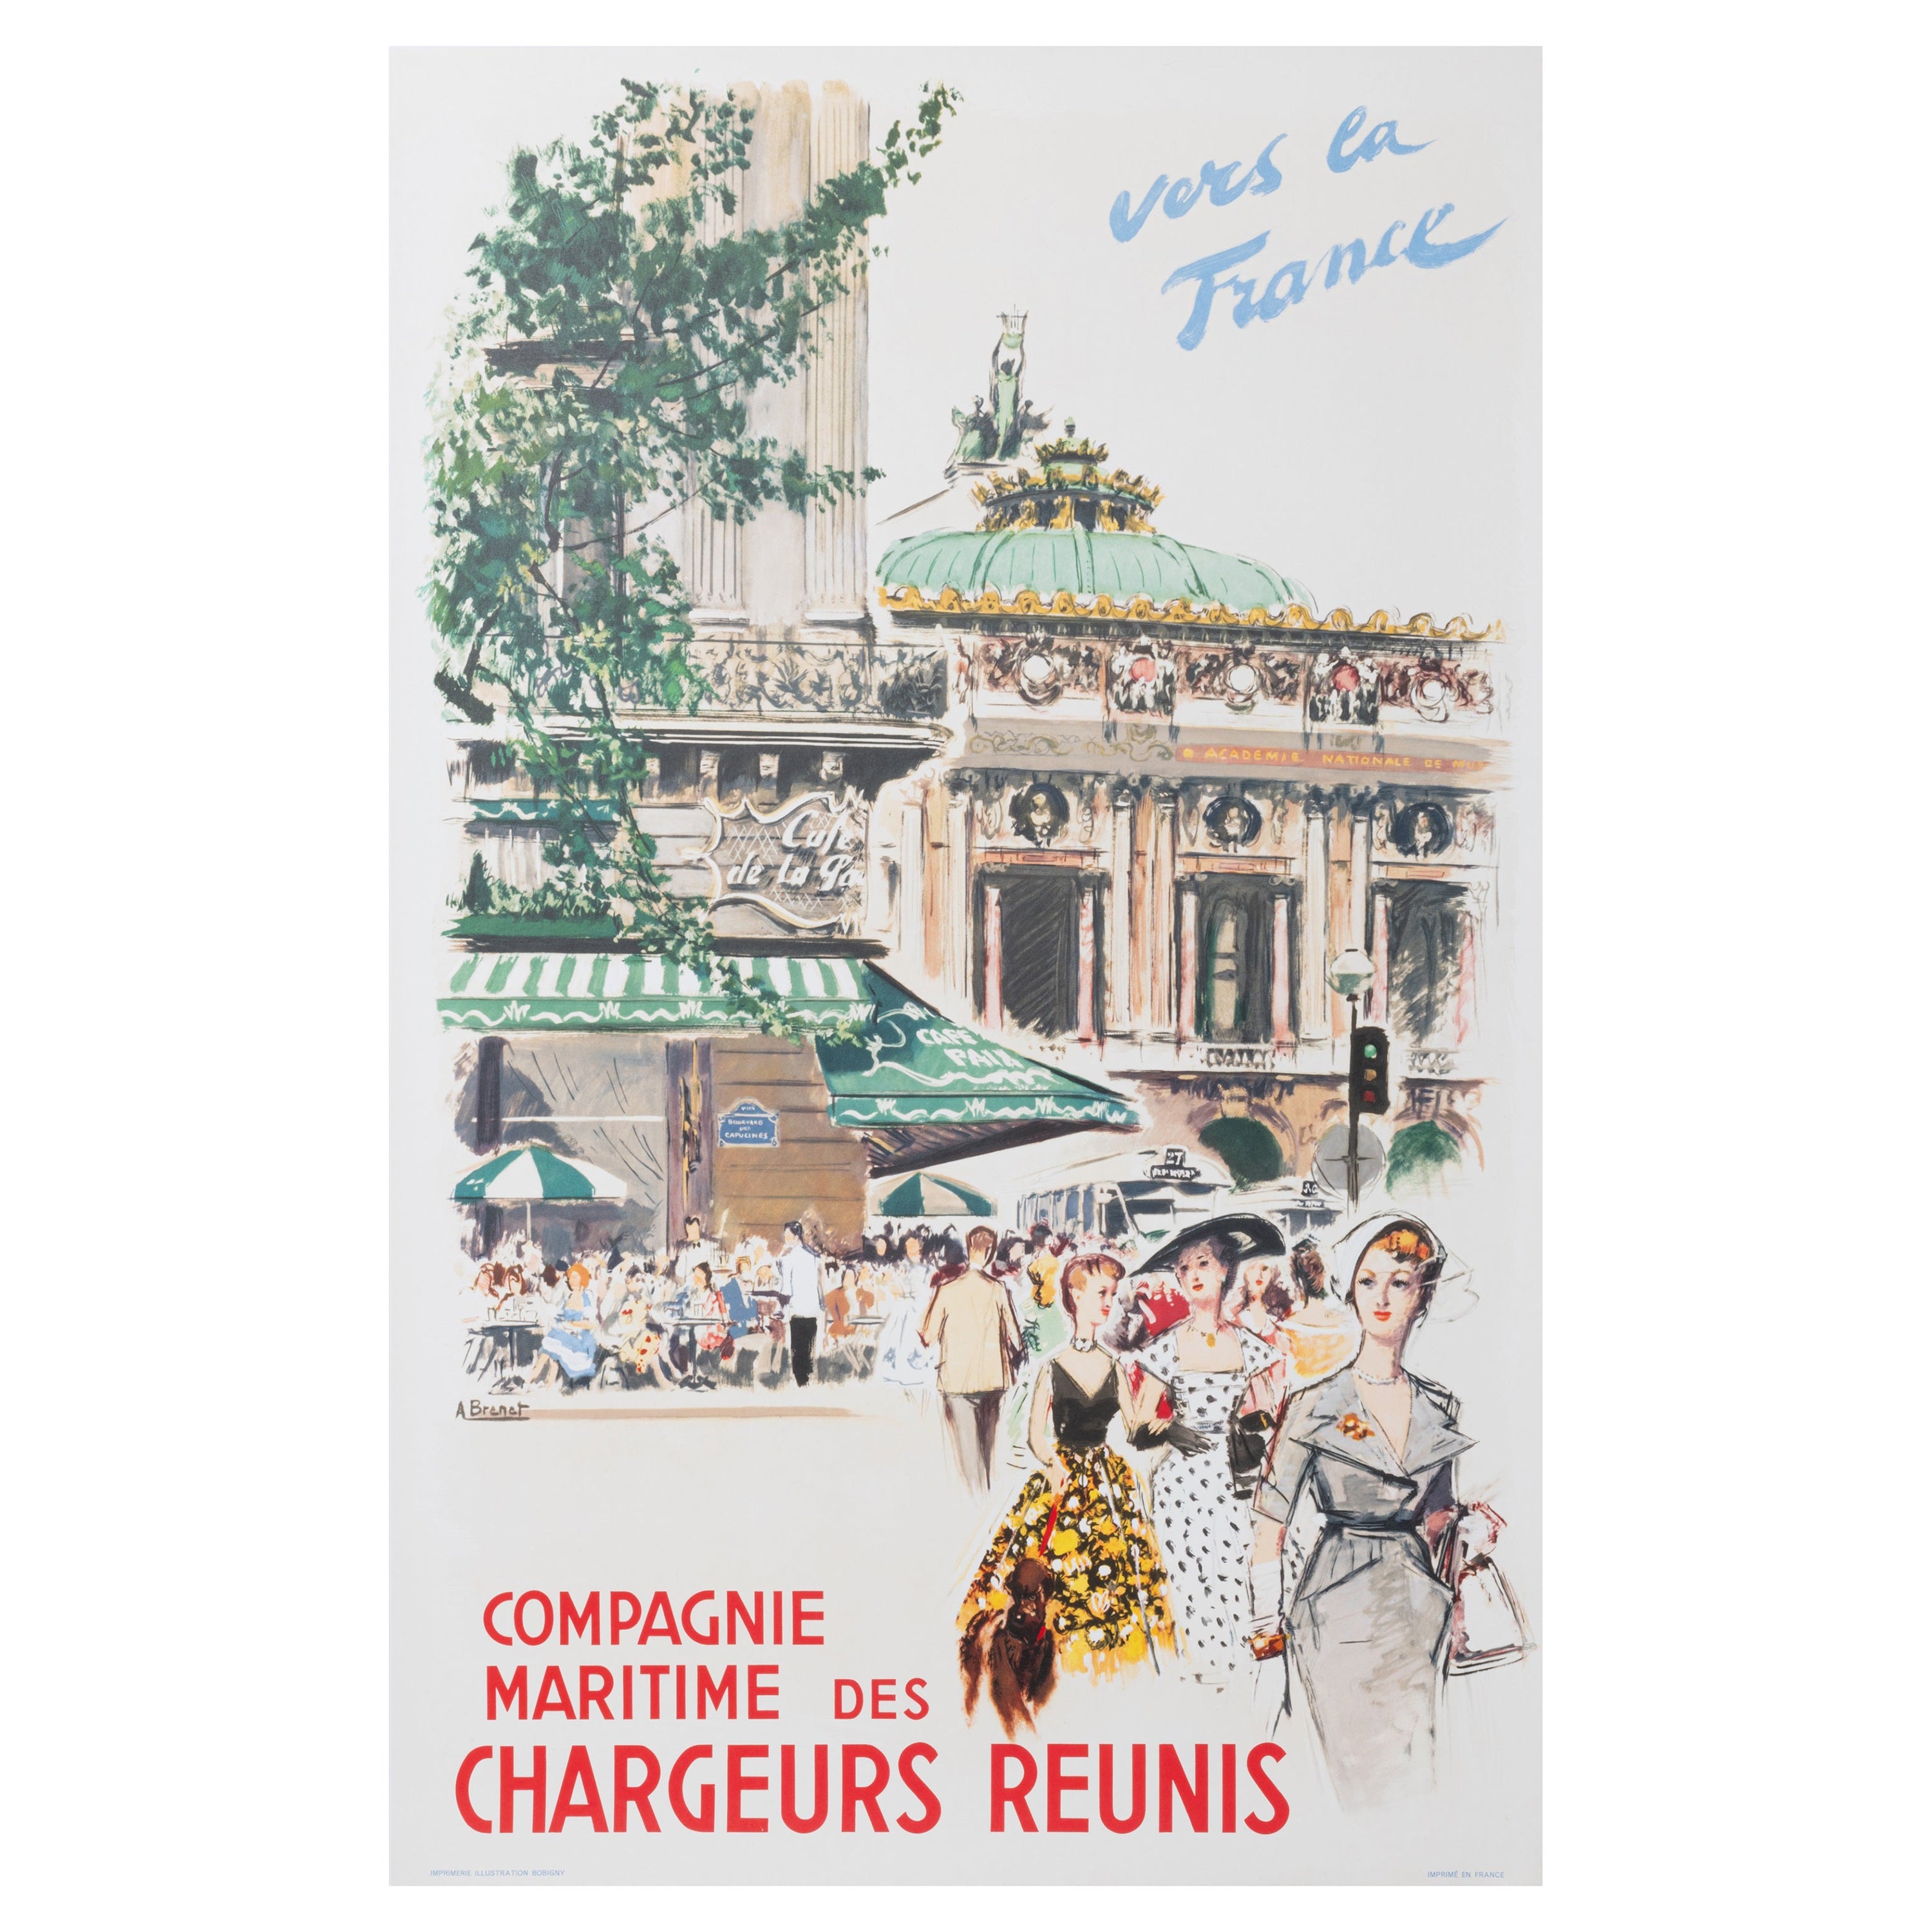 Brenet, Original Boat Poster, Paris Cafe Opera, Cruise Line, Chargeur Reuni 1950